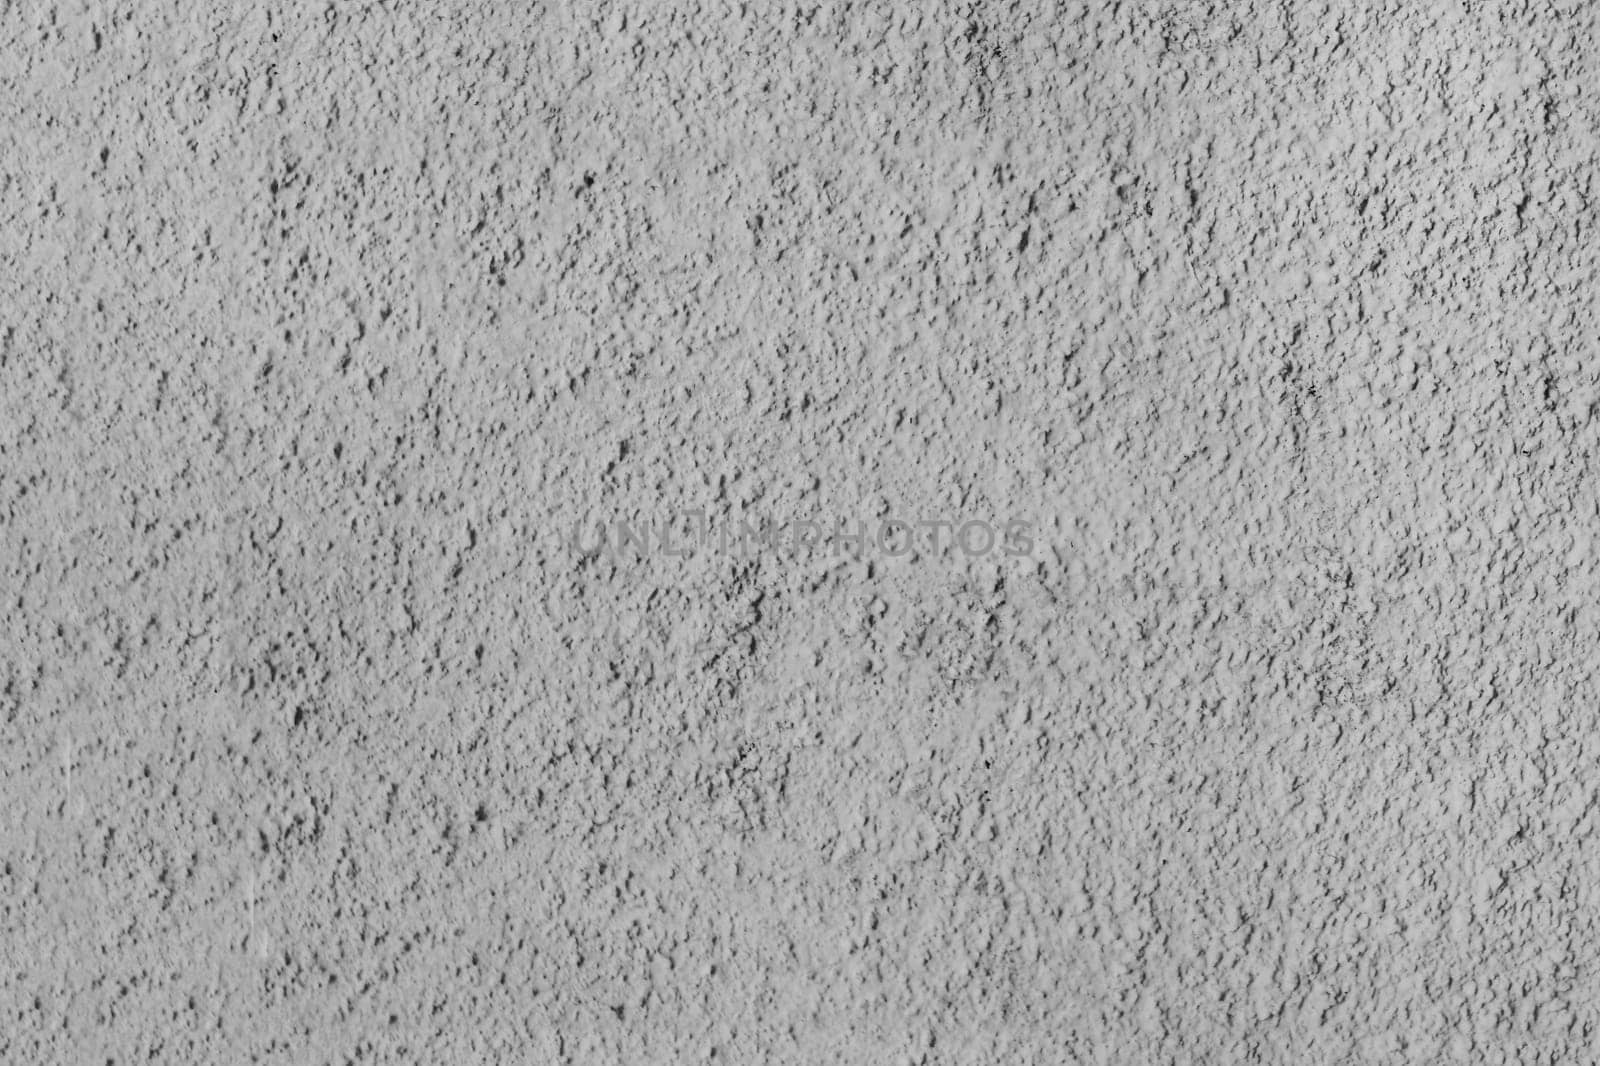 Rough texture of a gray concrete wall.